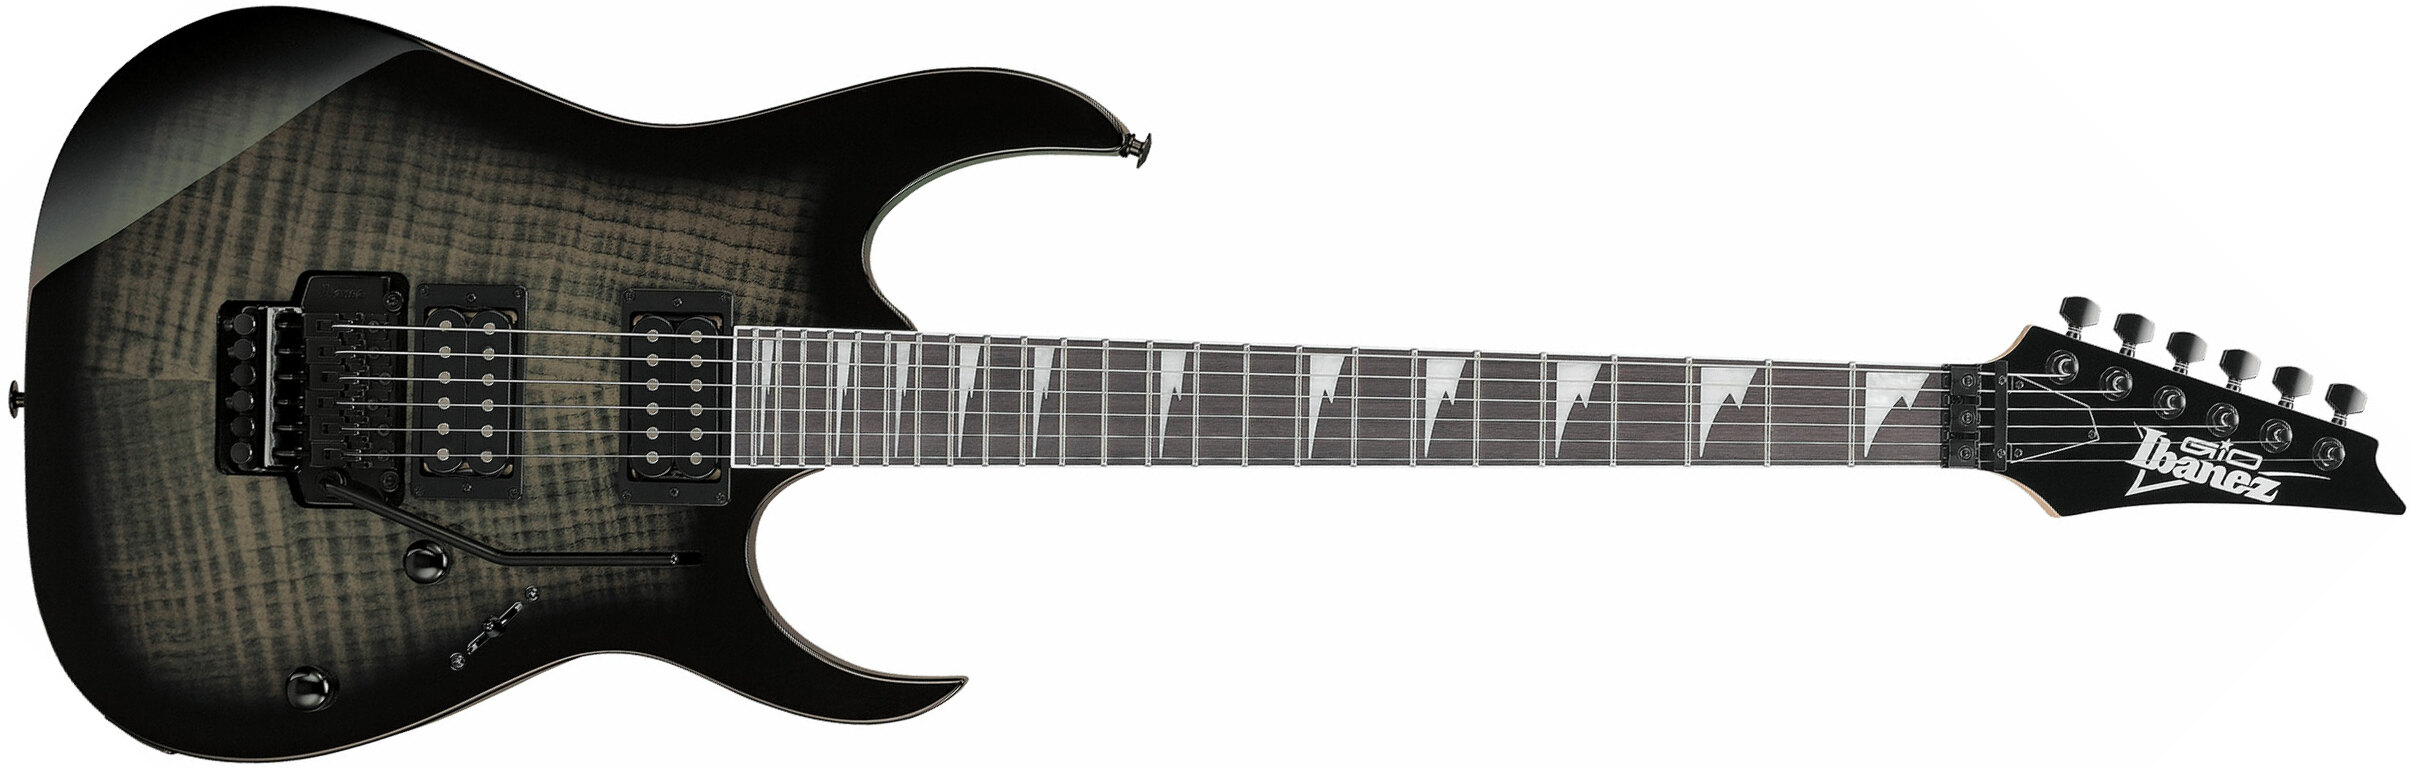 Ibanez Grg320fa Tks Gio 2h Fr Pur - Transparent Black Sunburst - E-Gitarre in Str-Form - Main picture